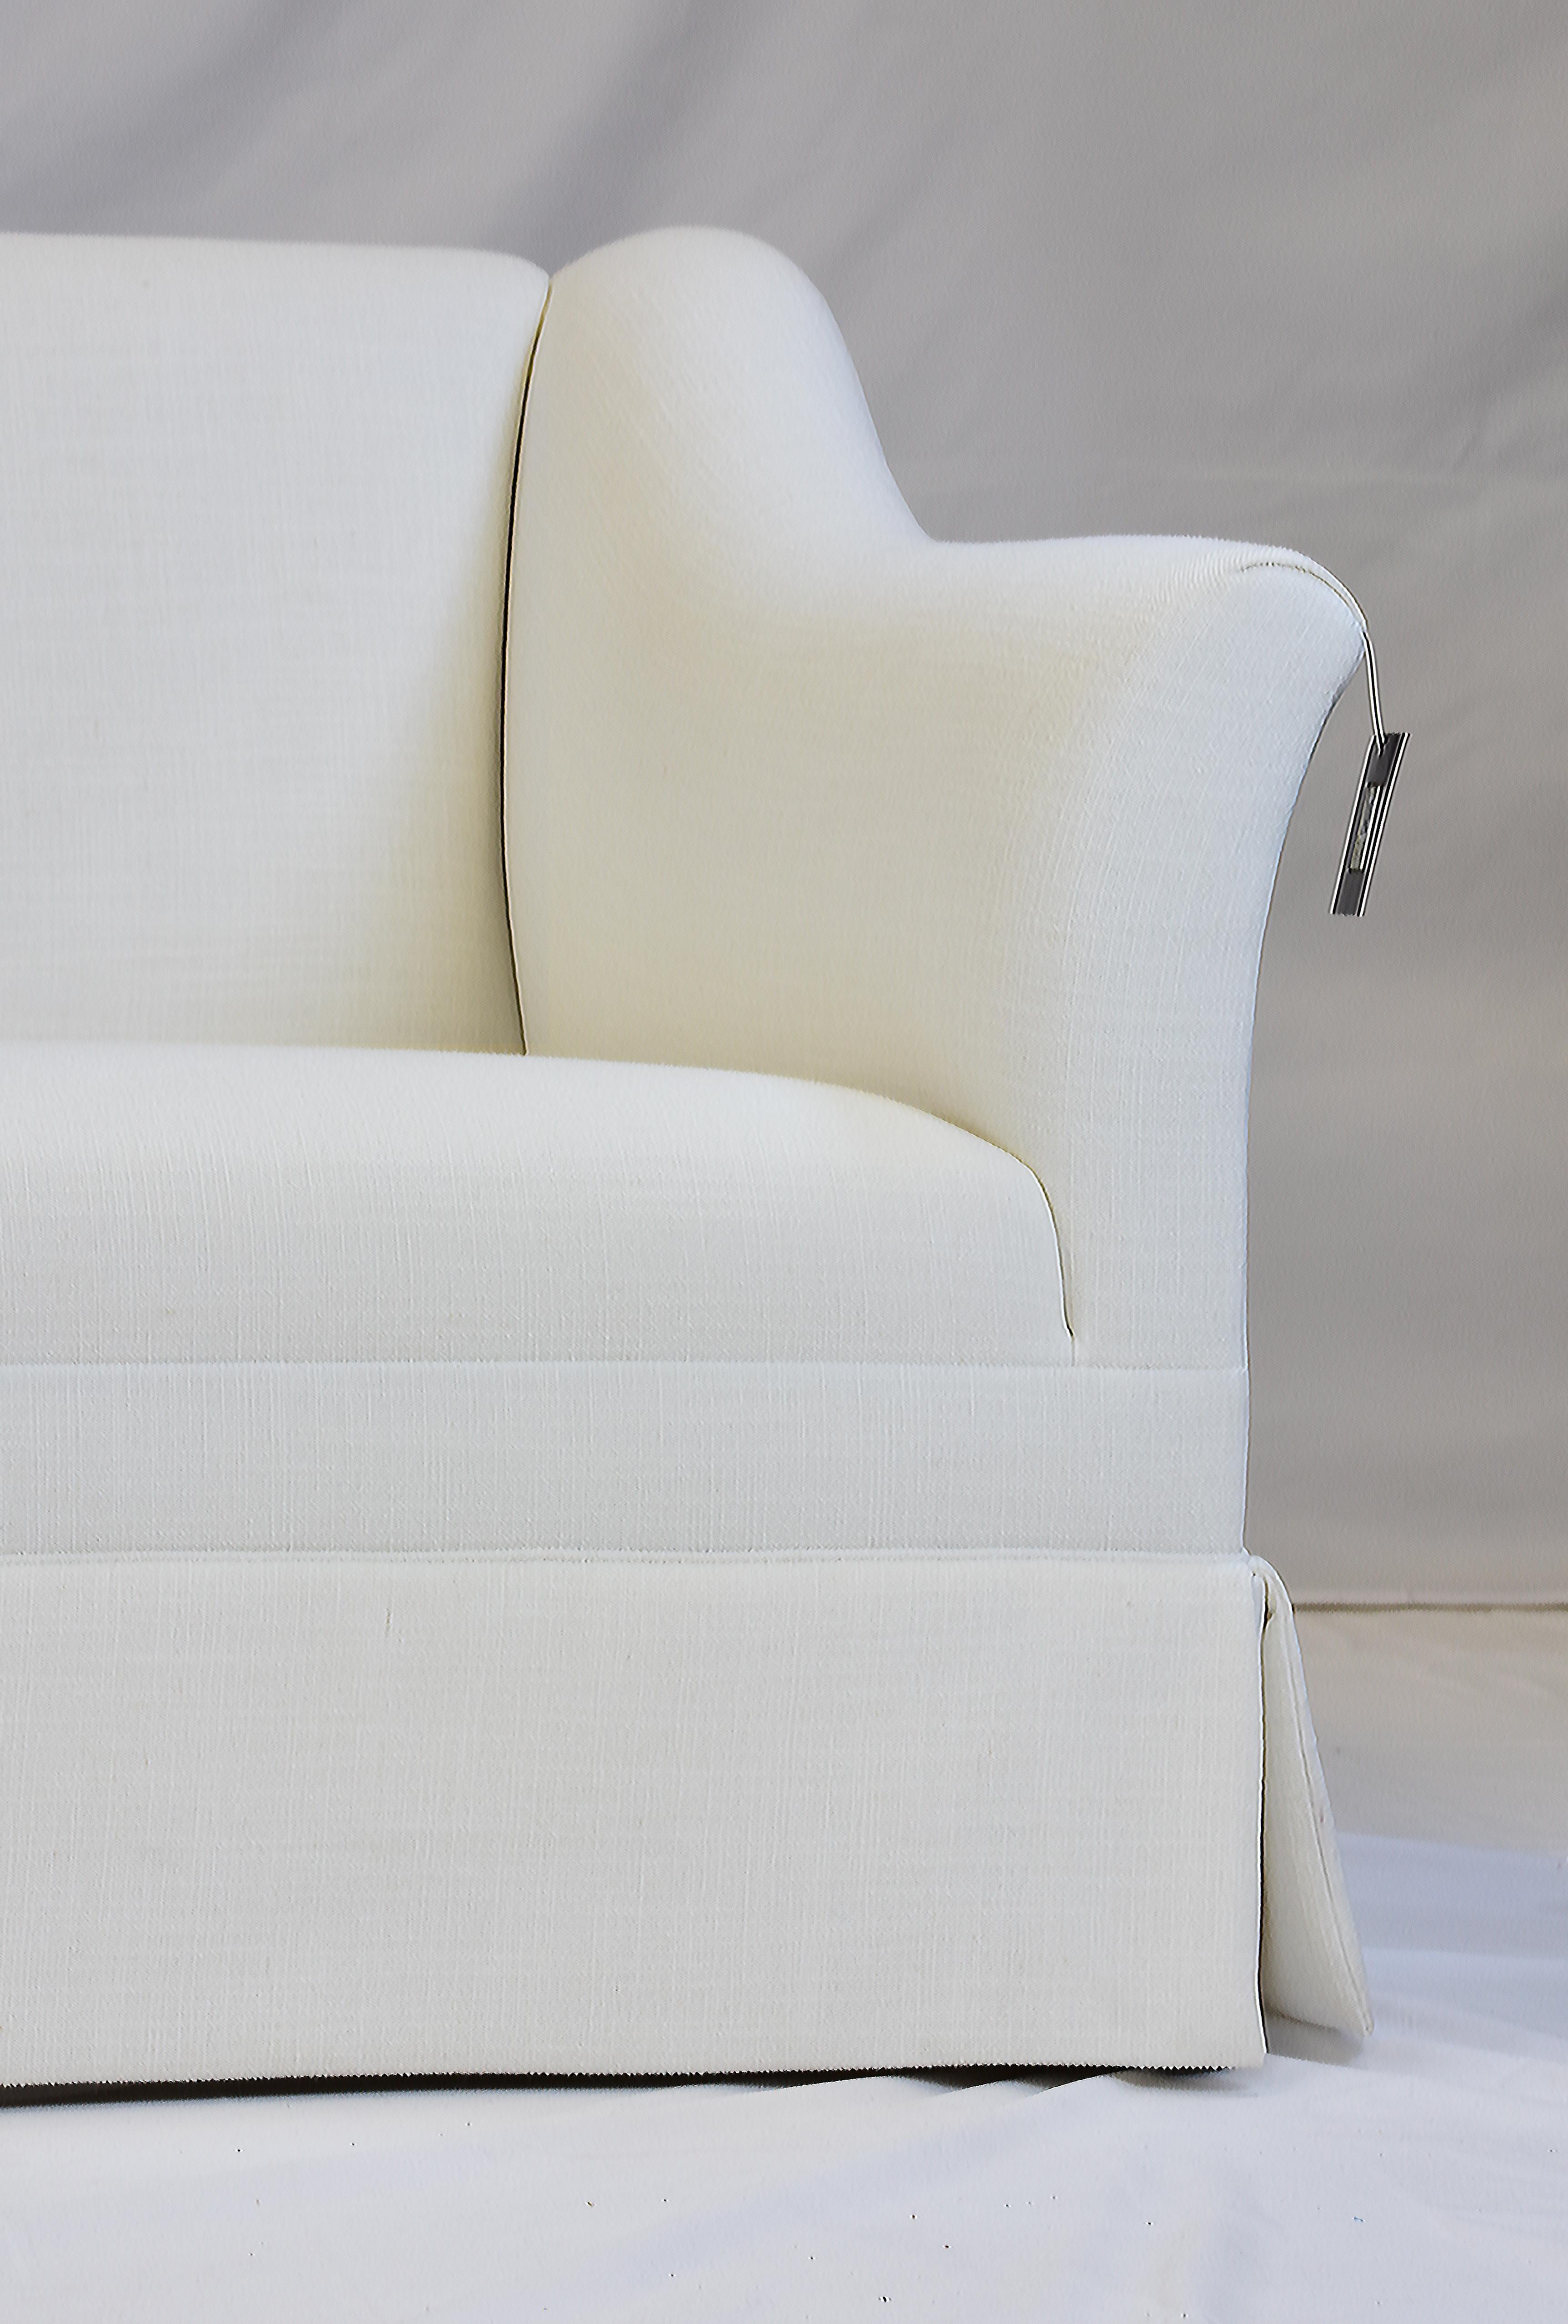 Le Jeune Upholstery Lucca Sofa Showroom Model in White Linen 5